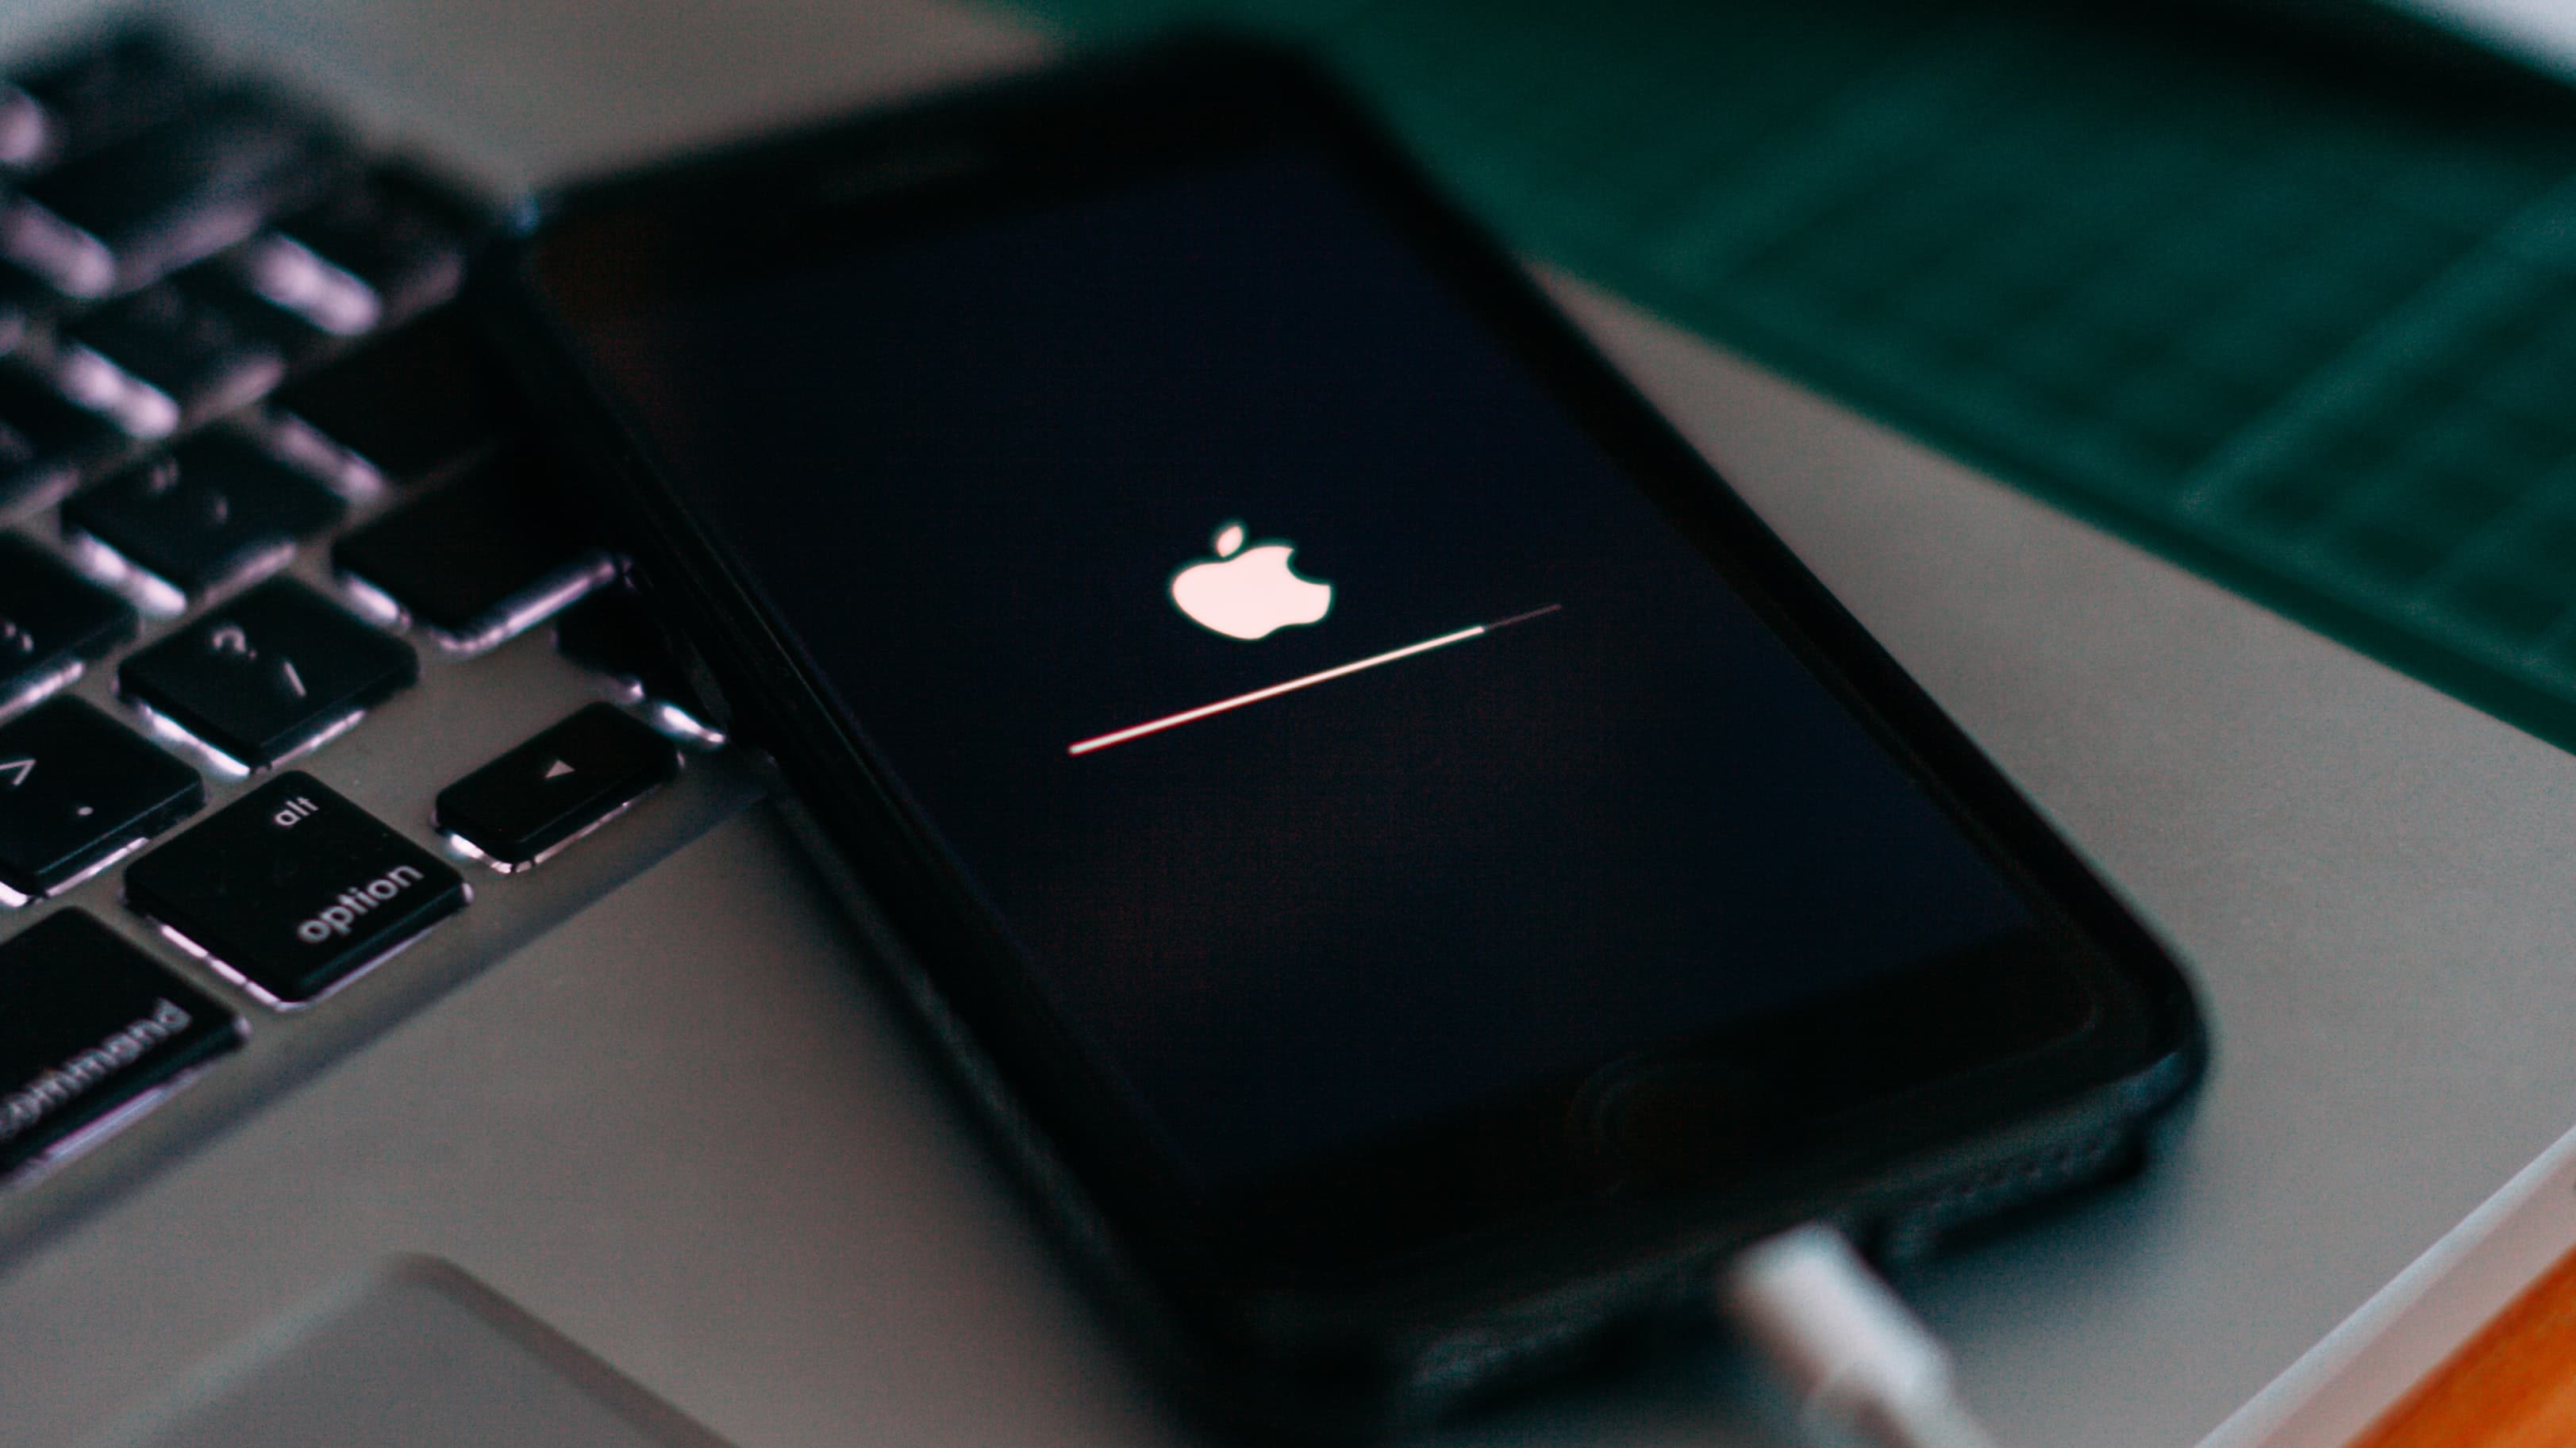 An iPhone laying on a MacBook, showing an iOS update progress bar